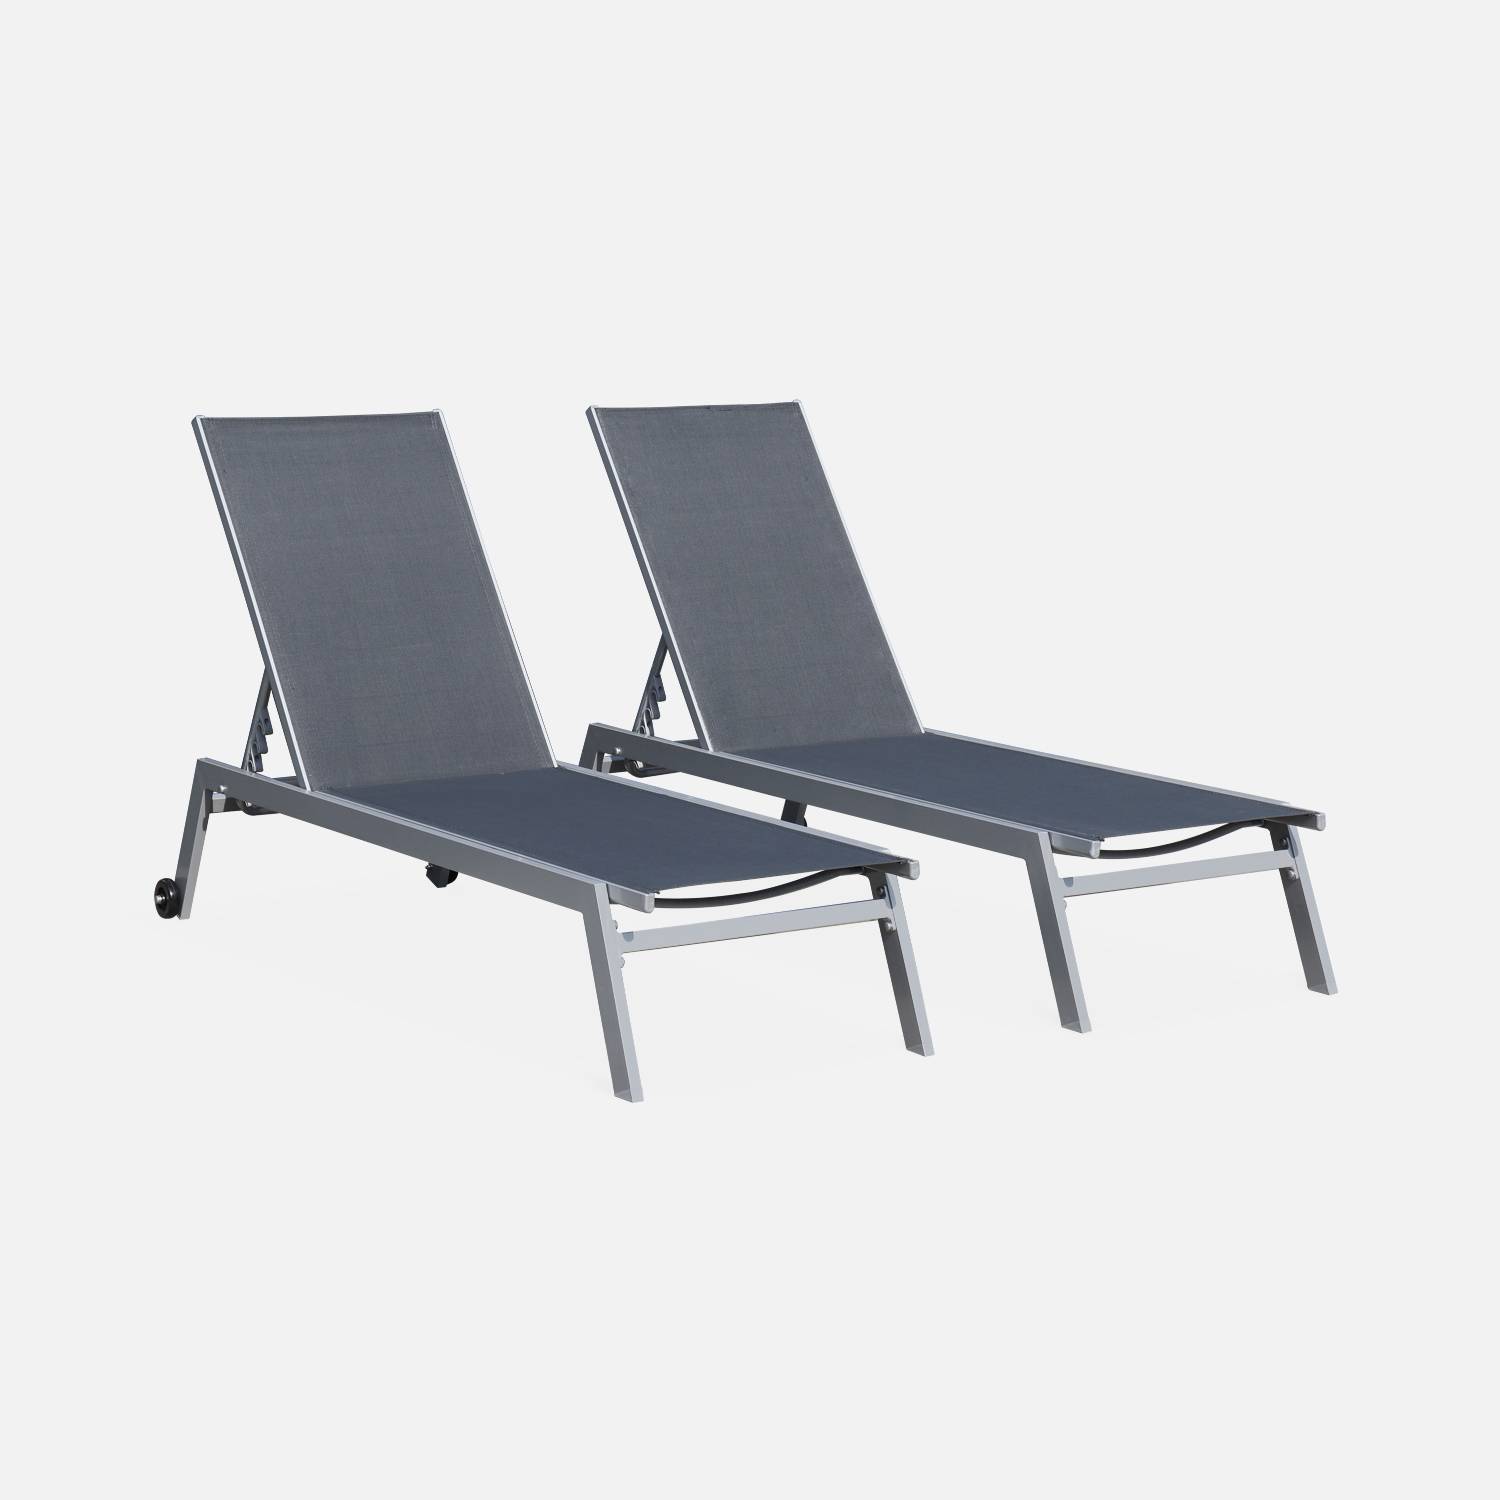 Pair of multi-position aluminium sun loungers with wheels - Elsa - Grey frame, Charcoal Grey textilene fabric Photo2